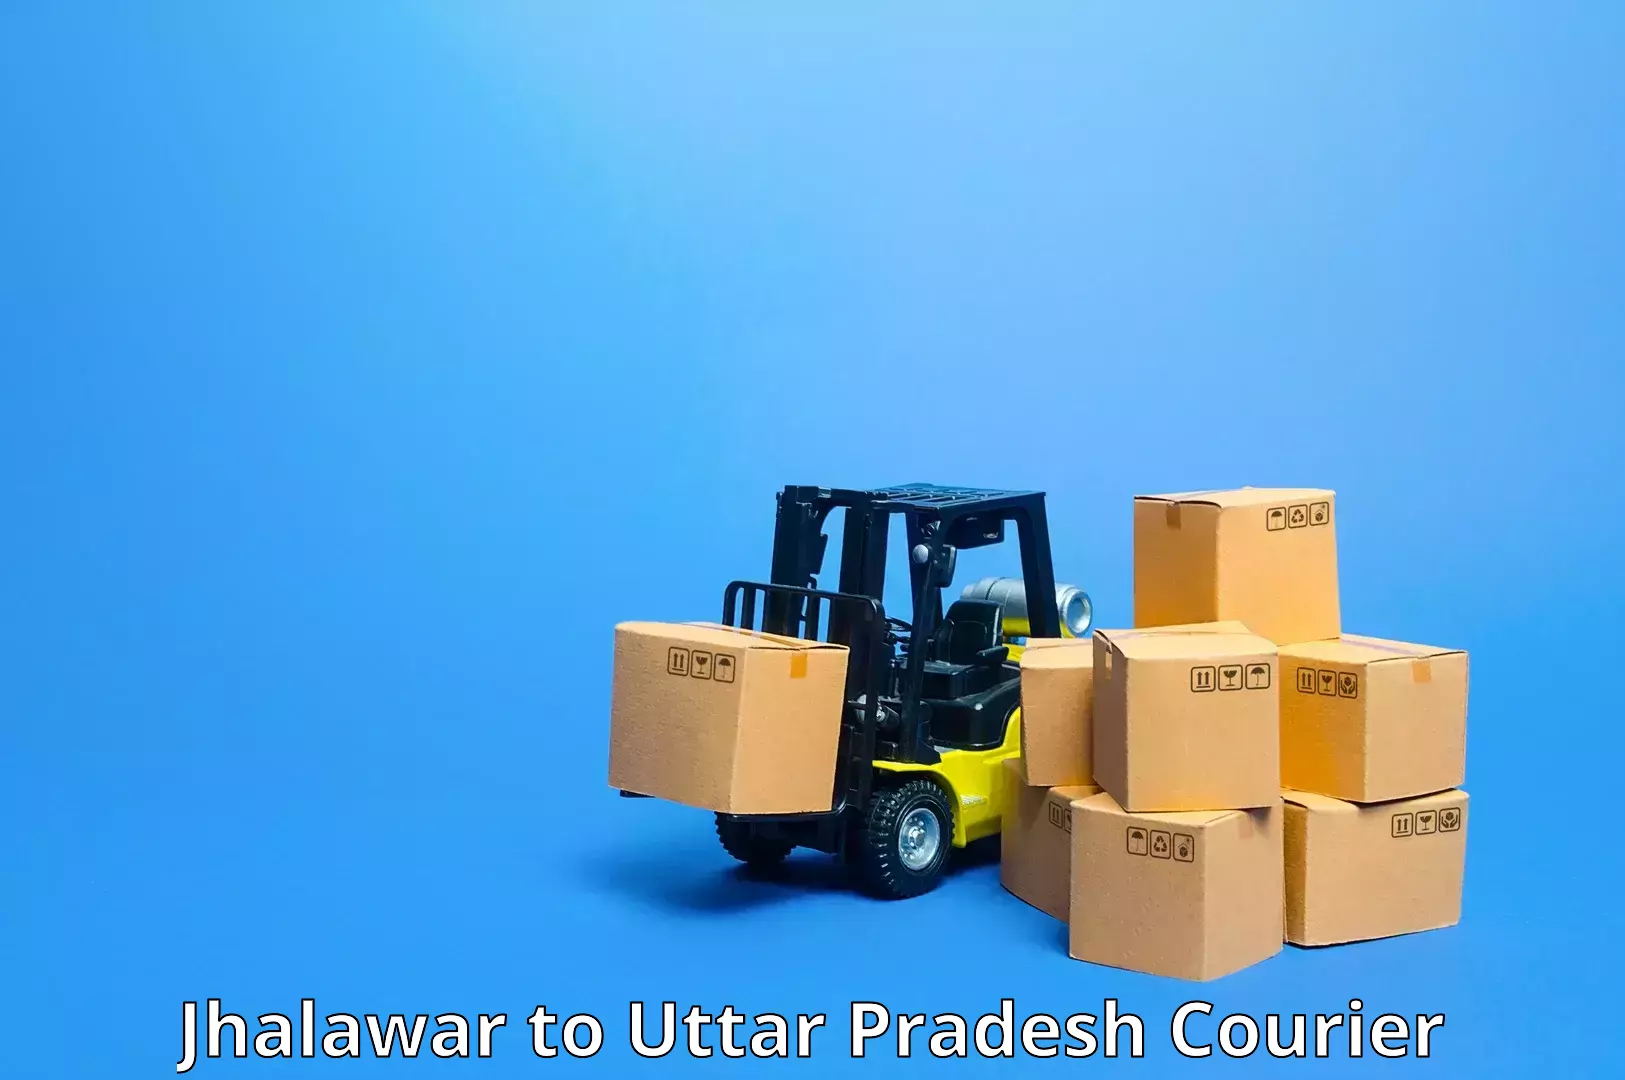 24/7 courier service Jhalawar to Moradabad